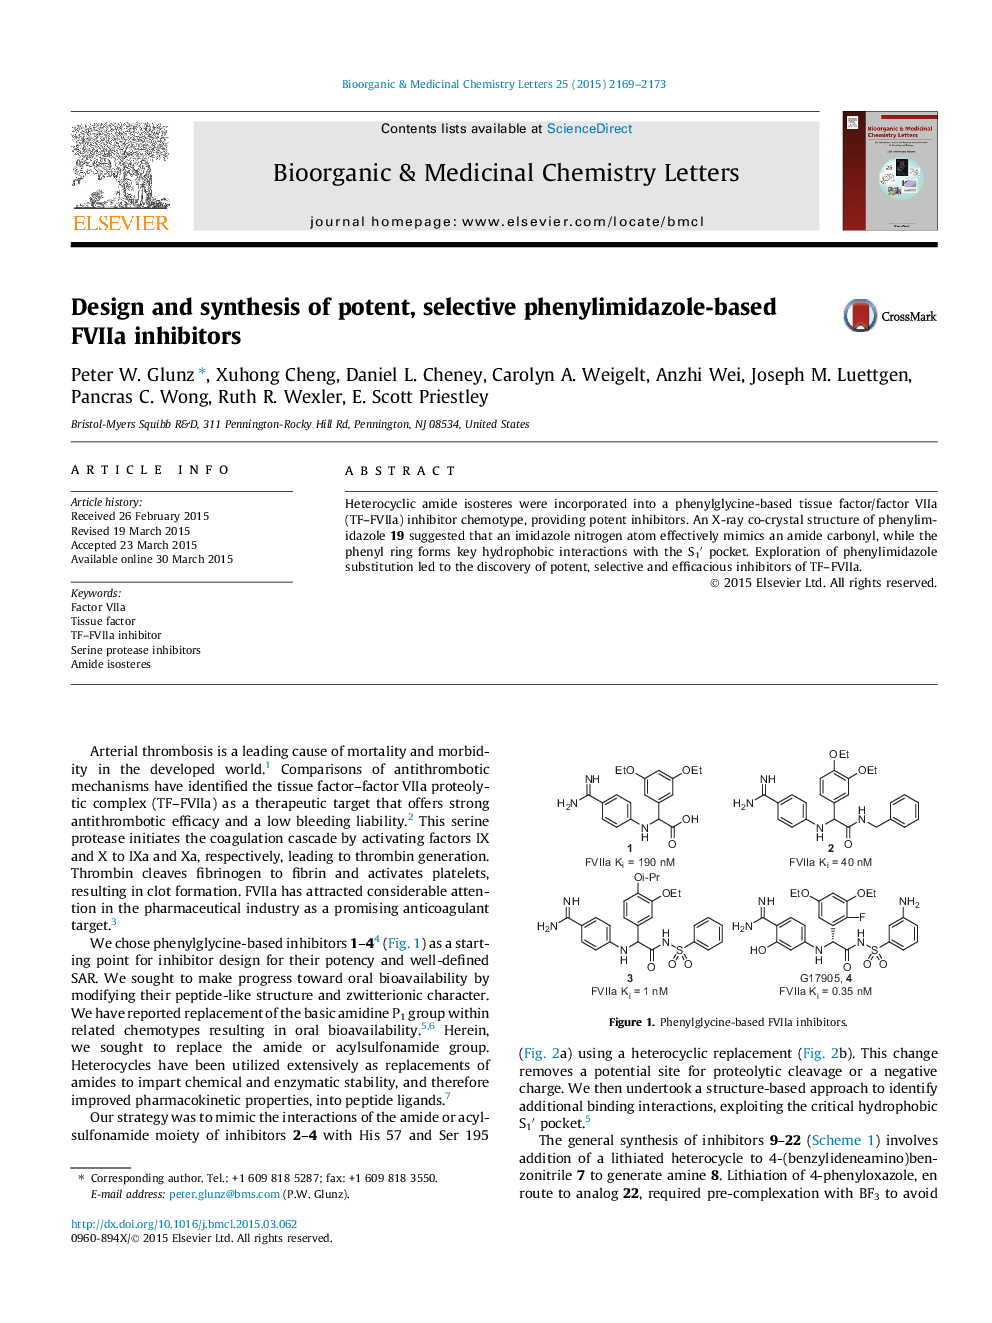 Design and synthesis of potent, selective phenylimidazole-based FVIIa inhibitors